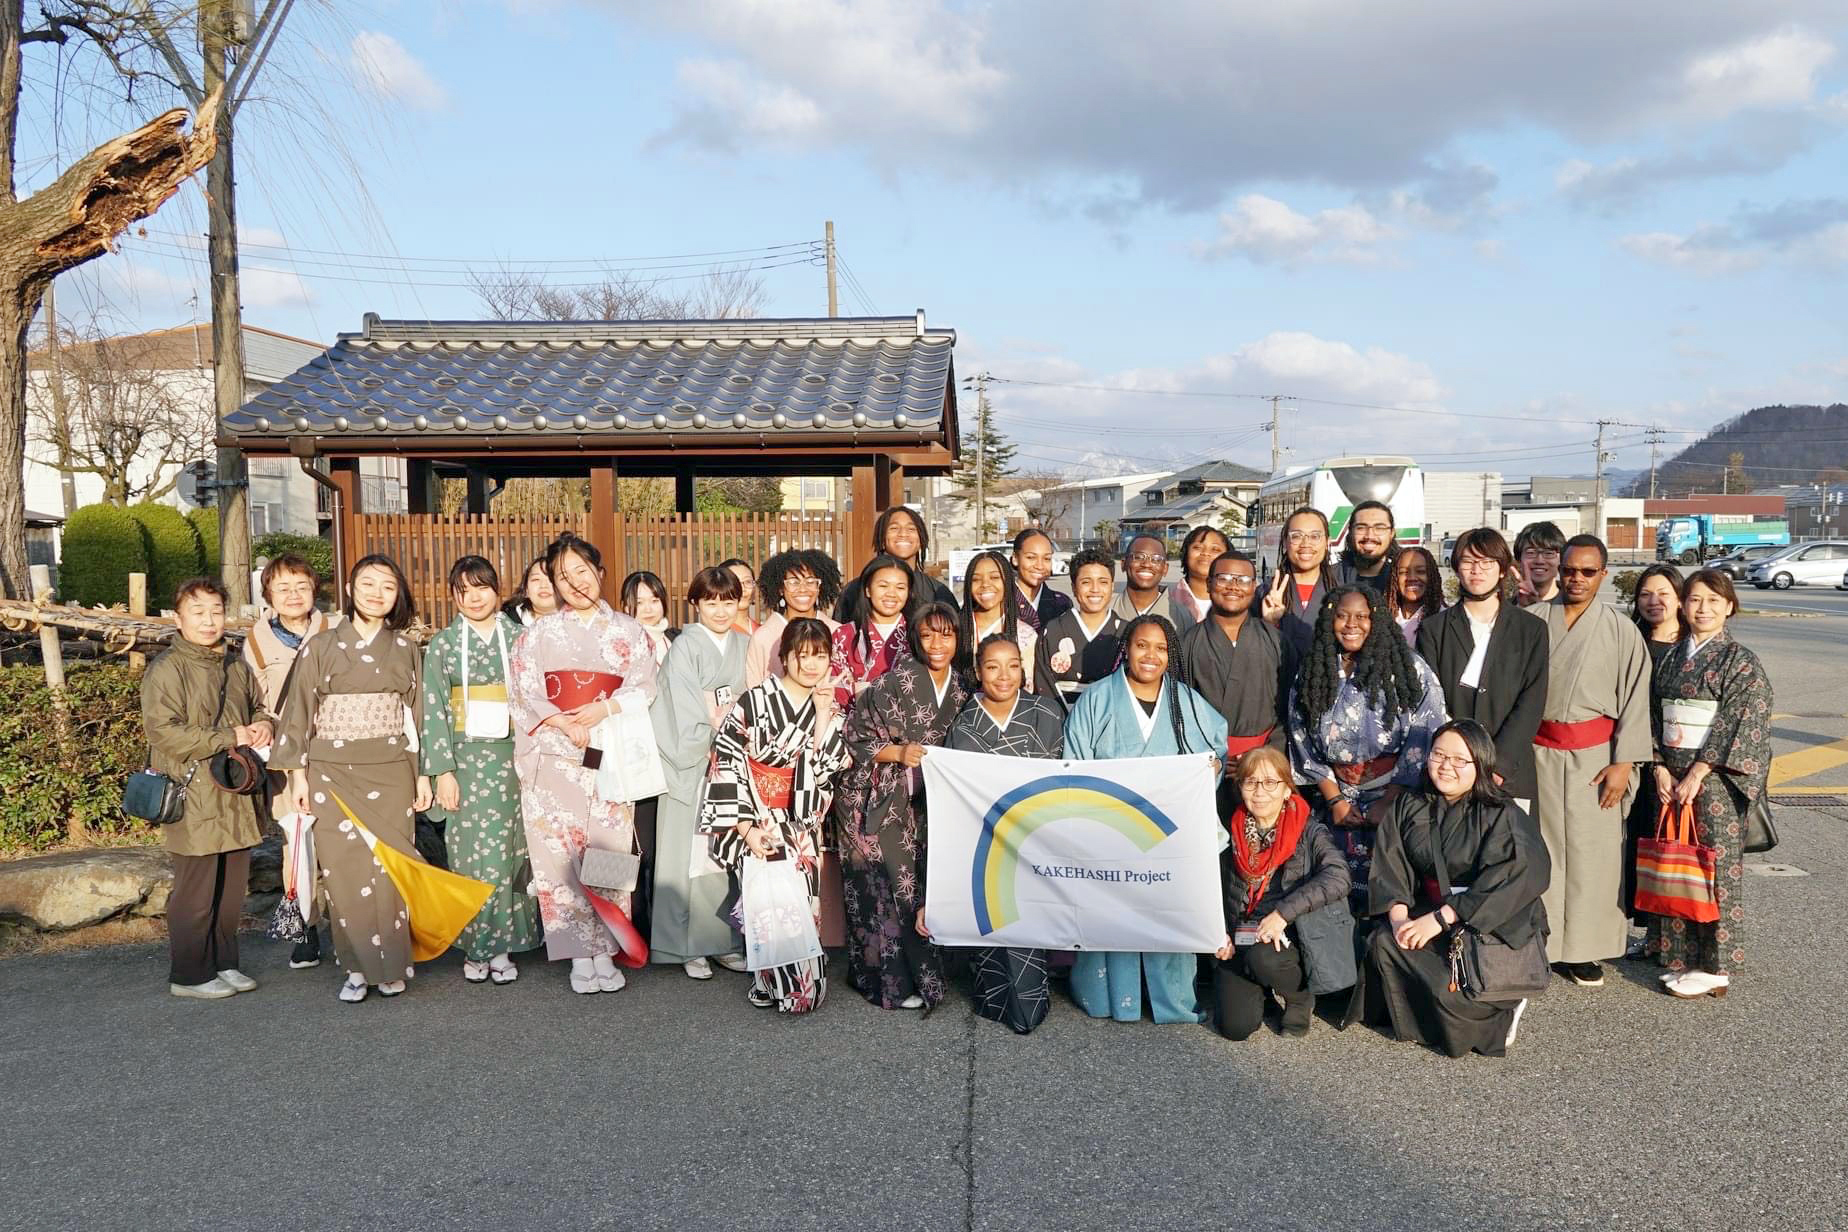 KAKEHASHIプロジェクトで来日した留学生たちに新発田市や村上市などを案内しました。